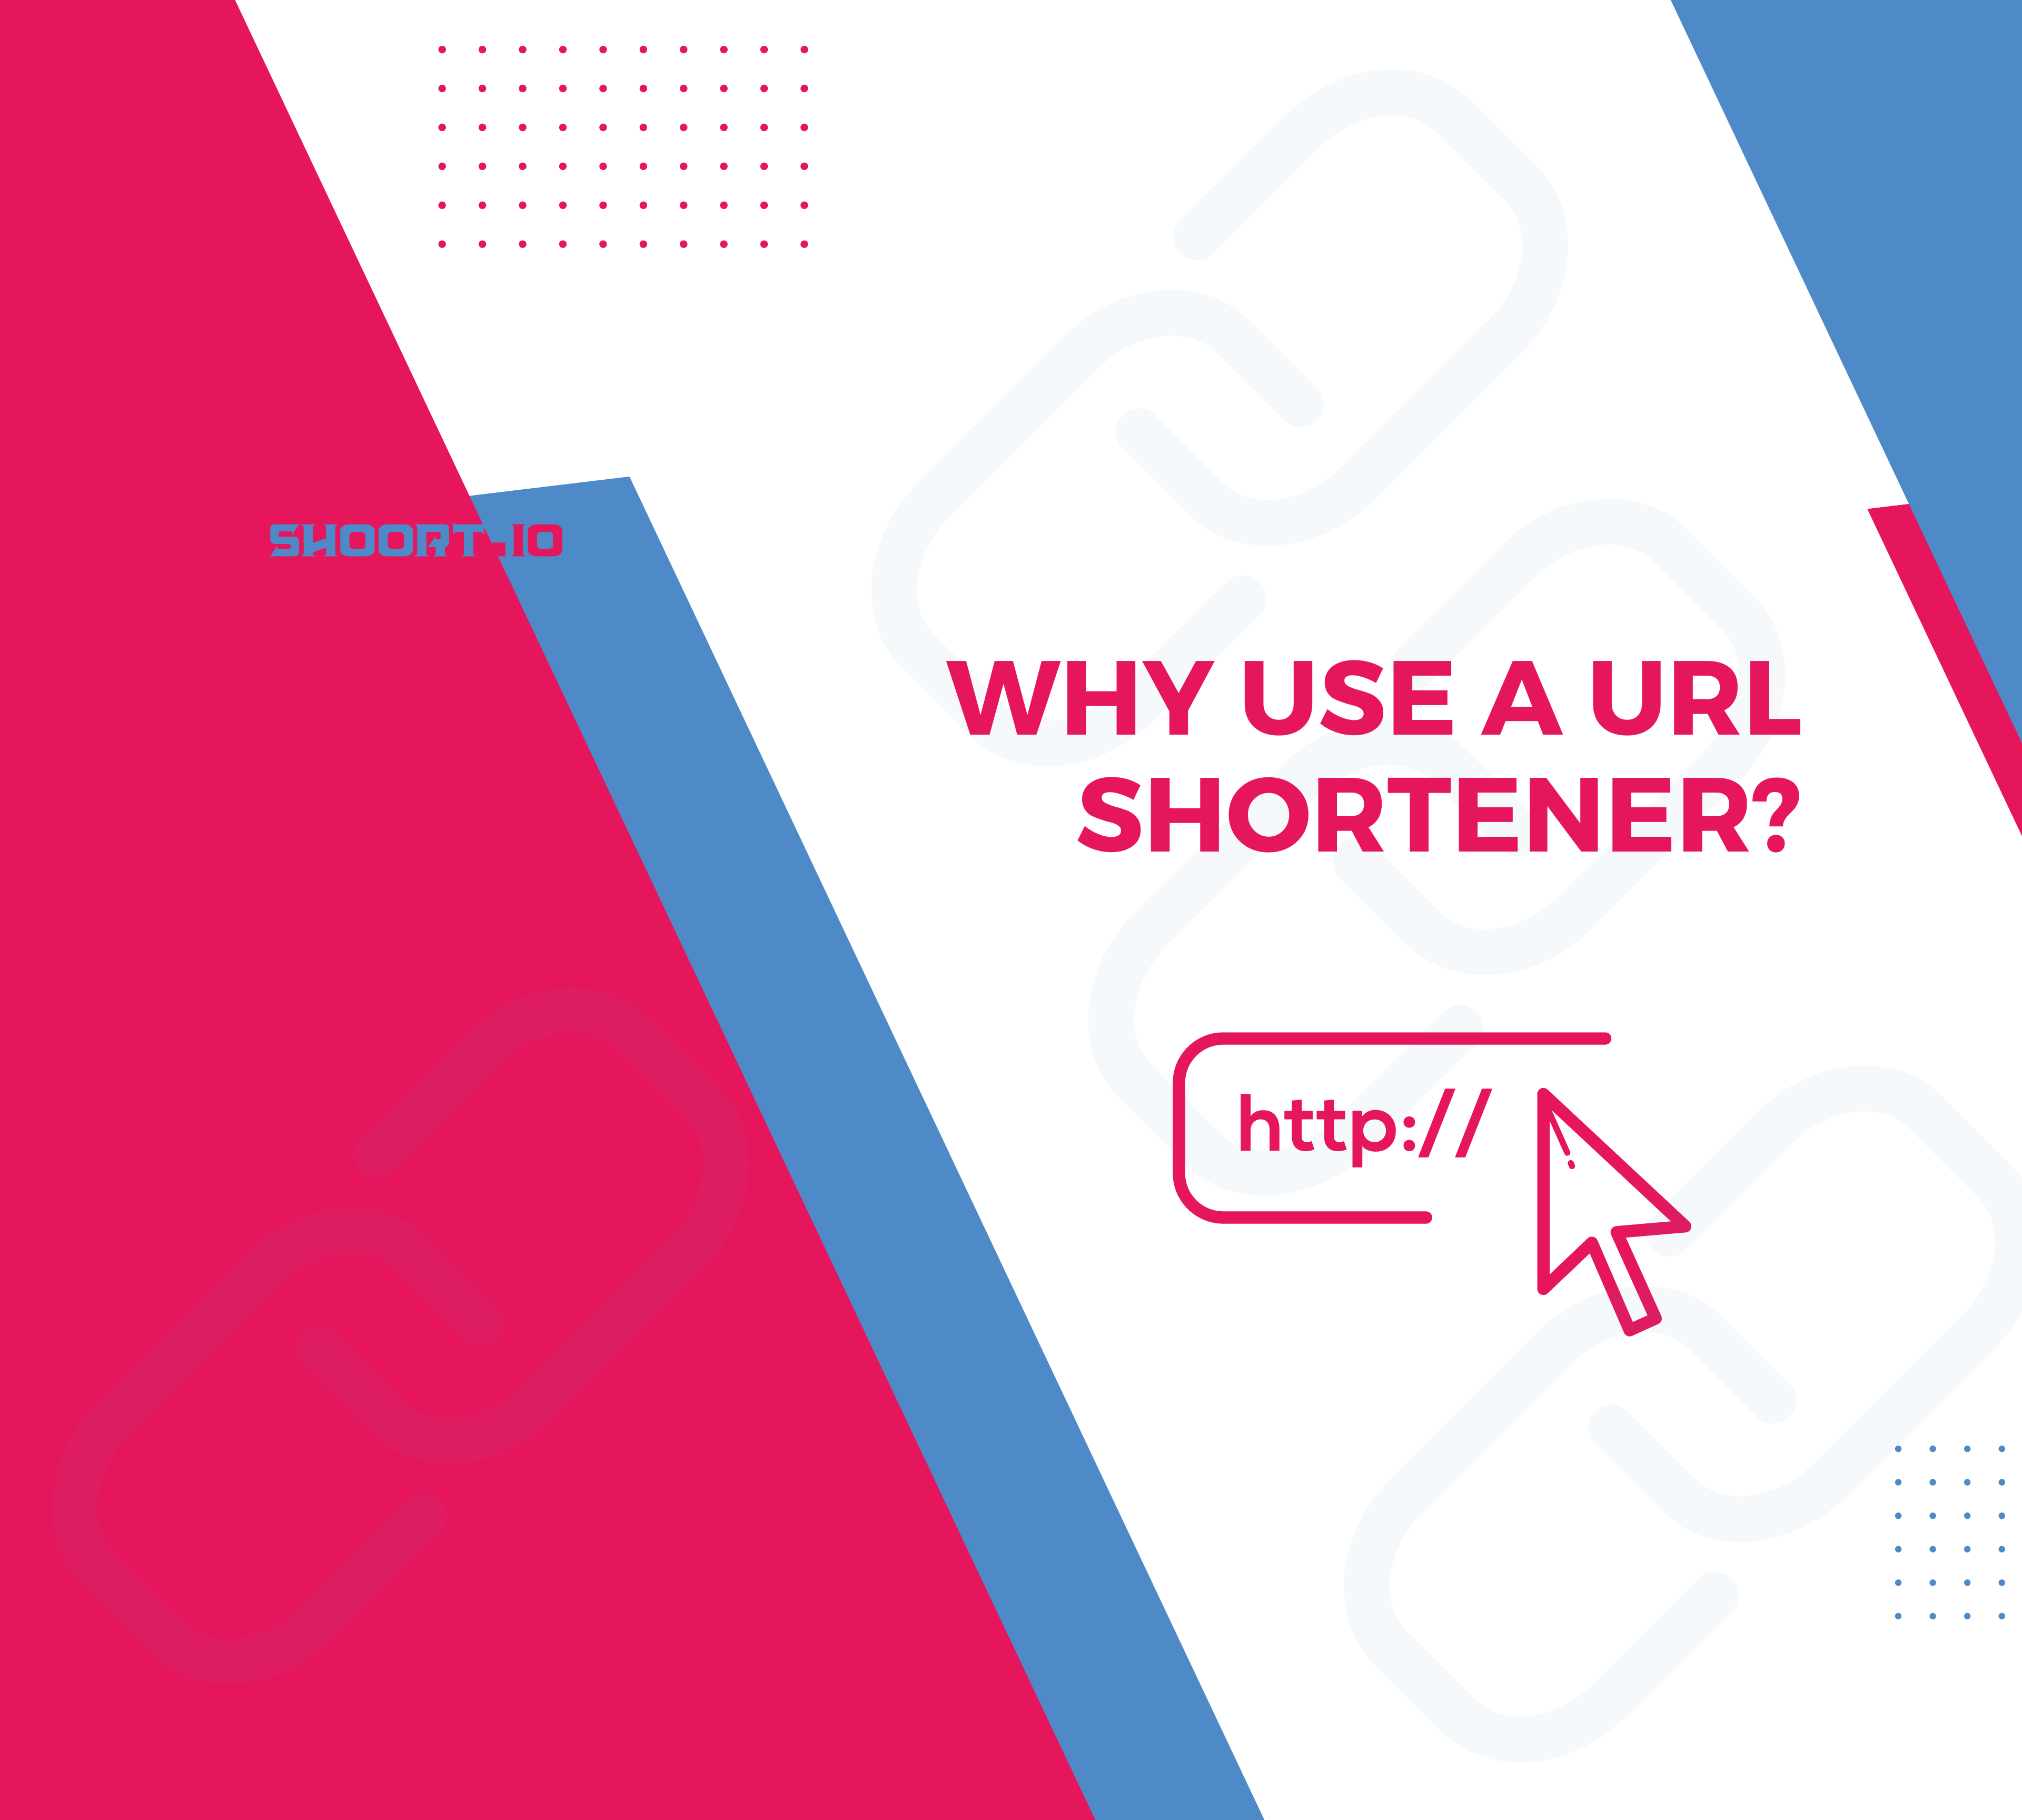 Why use a URL shortener?